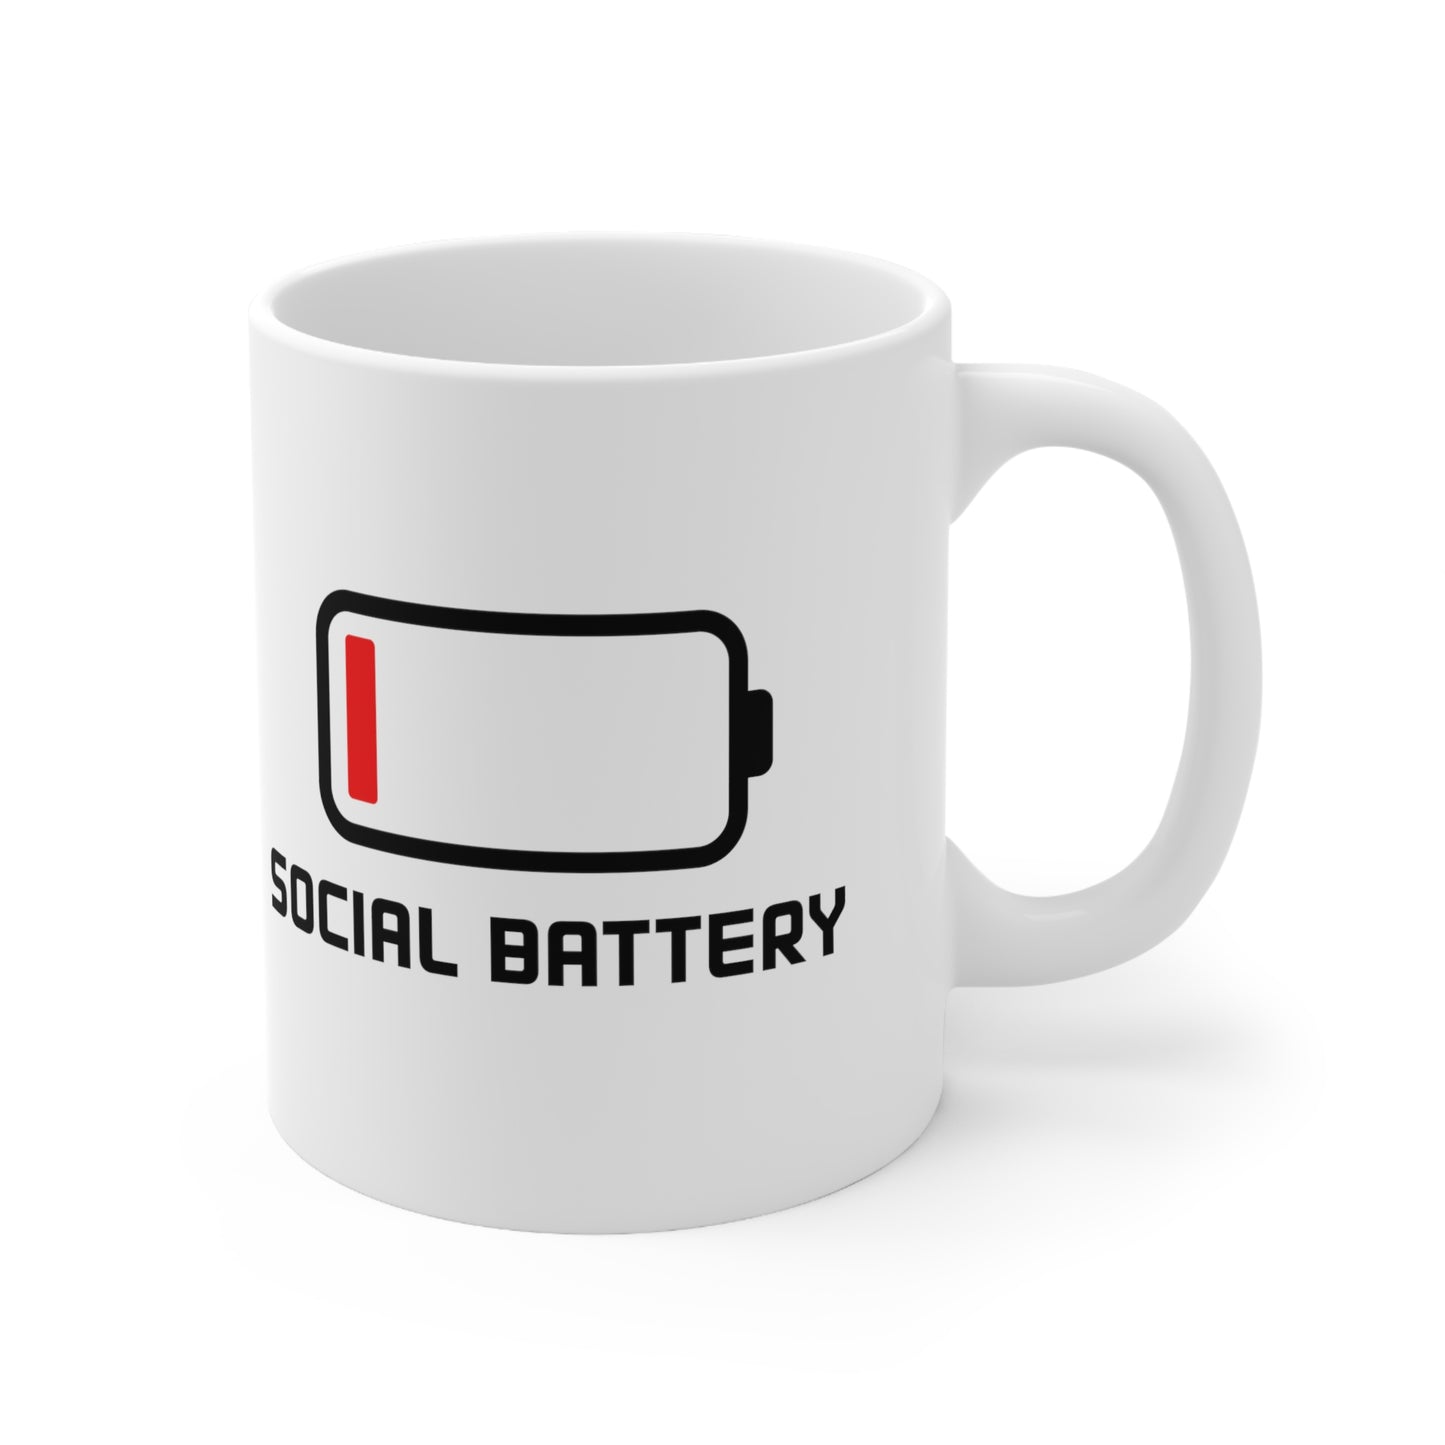 [Social Battery] 11oz Ceramic Mug